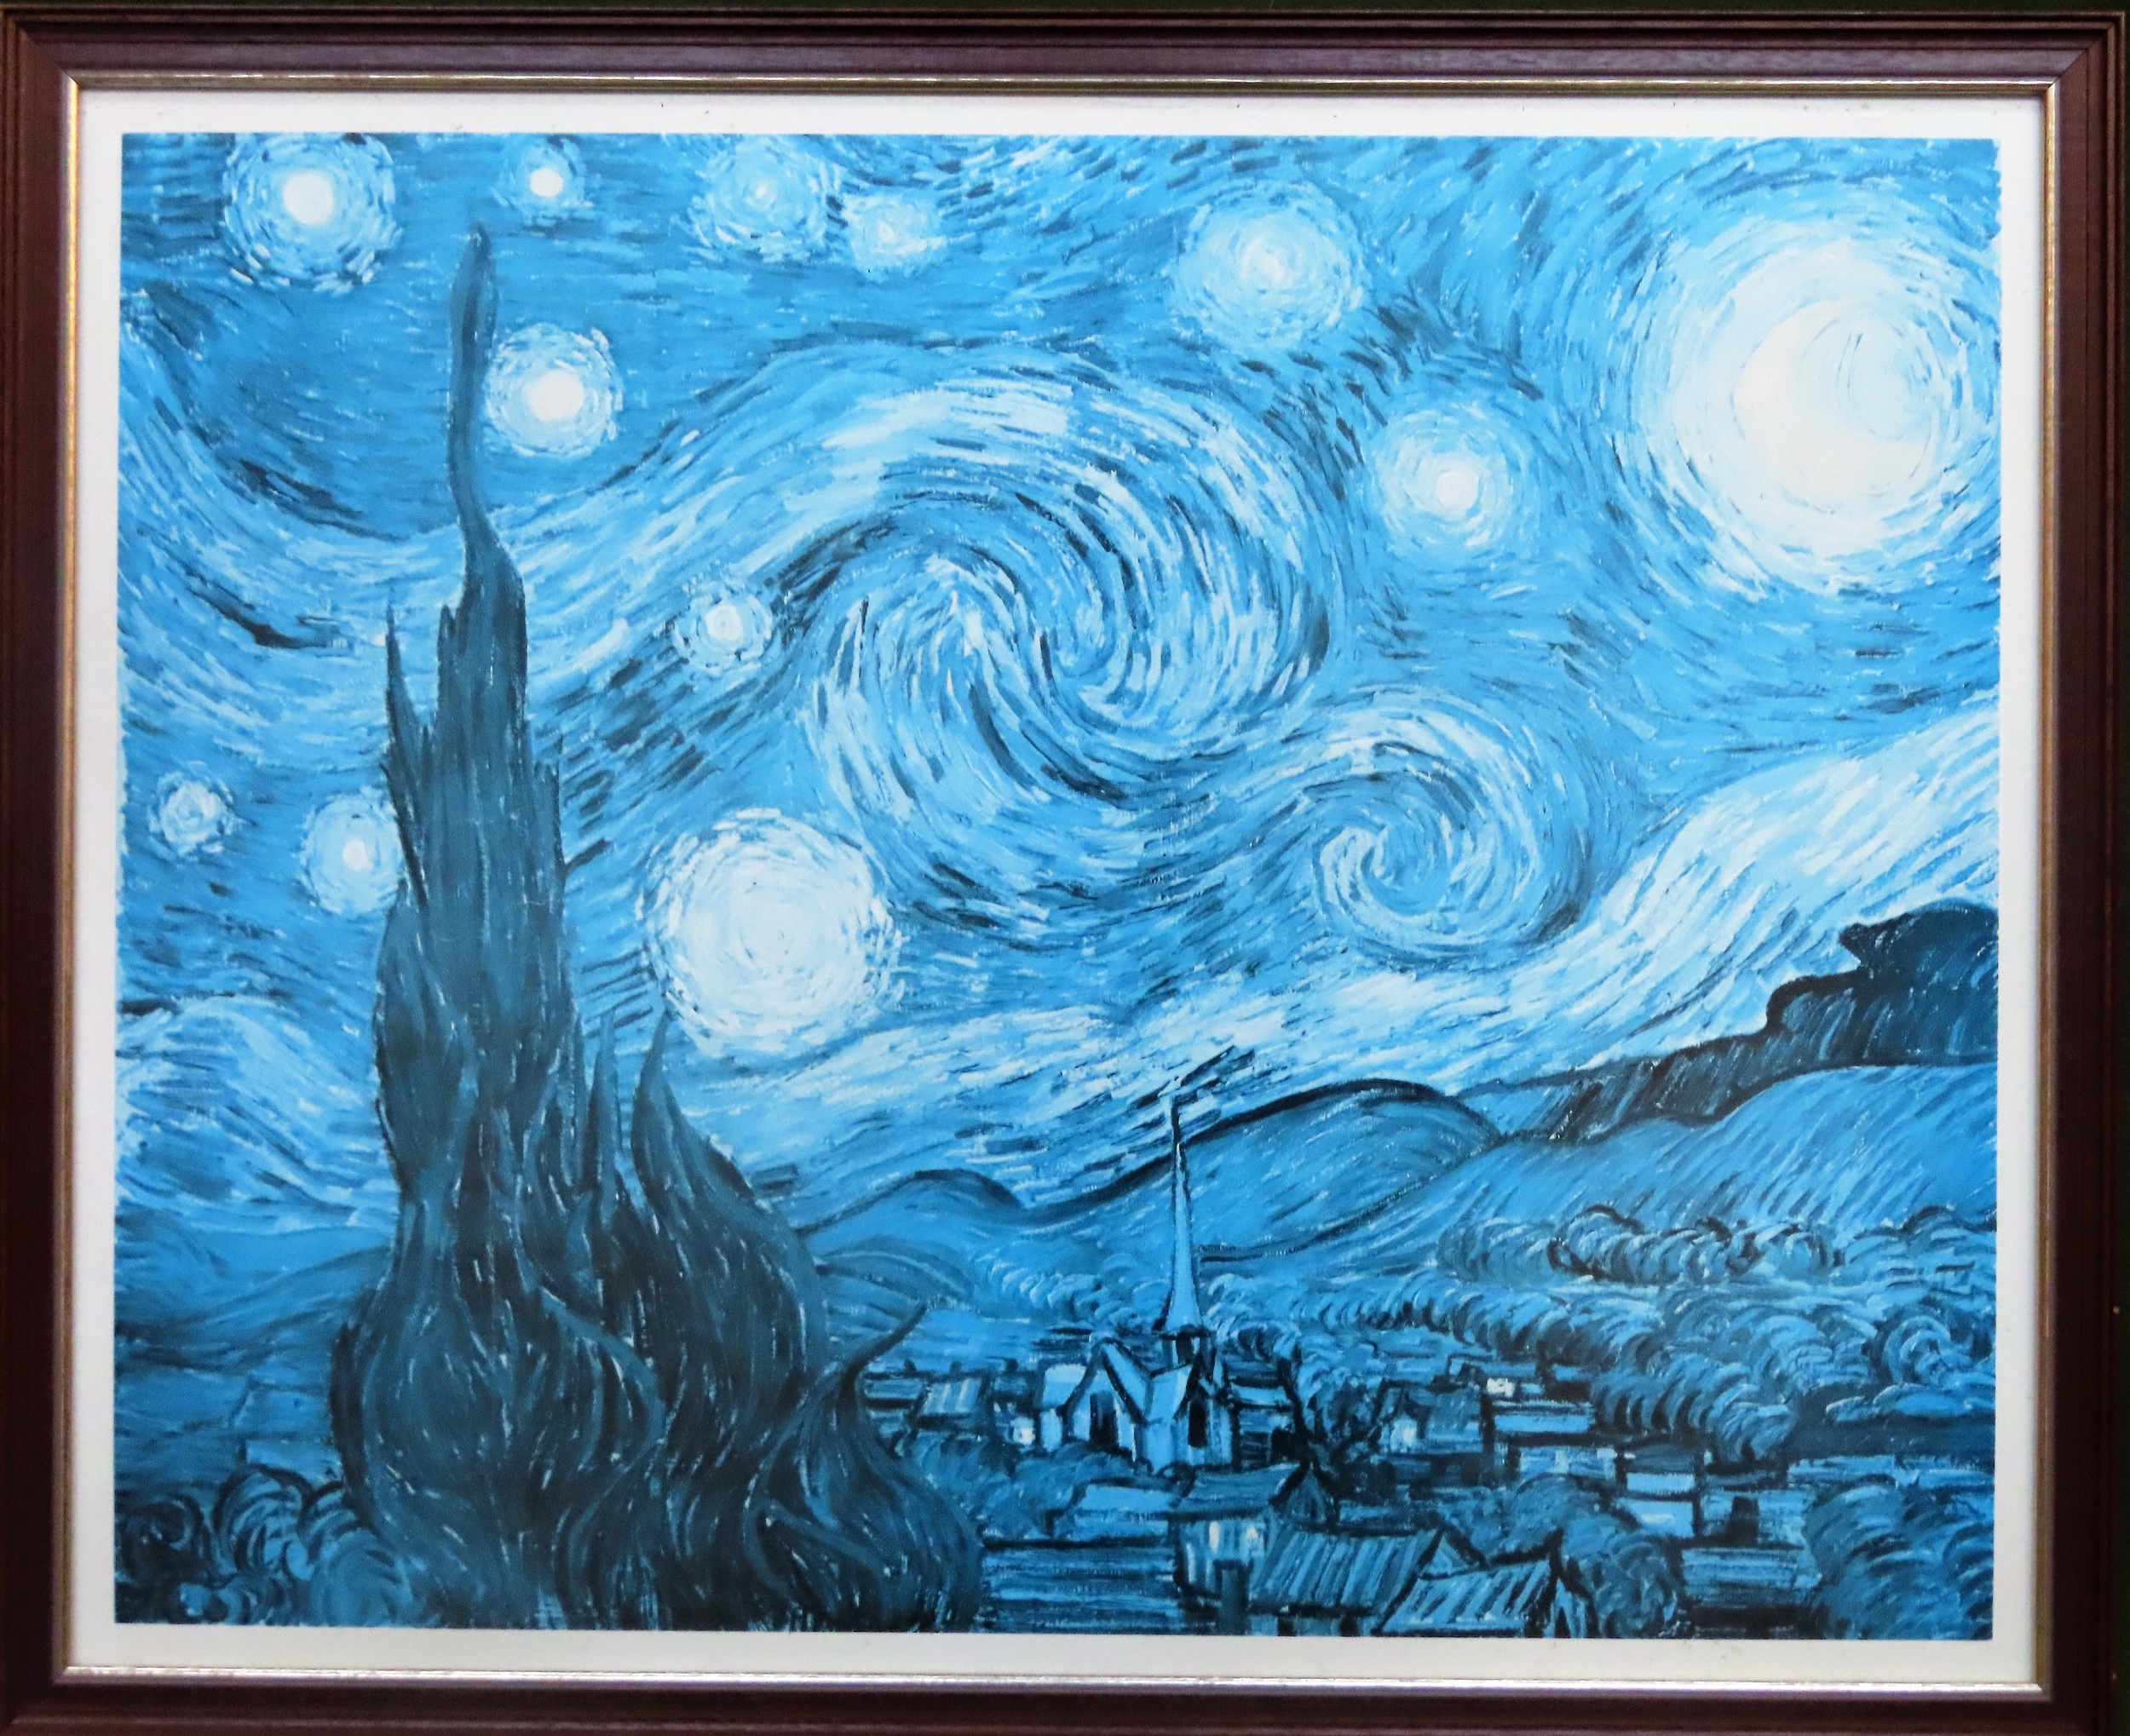 Vincent Van Gogh - Framed polychrome print - Starry Night. Approx. 52.5cms H x 66.5cms W